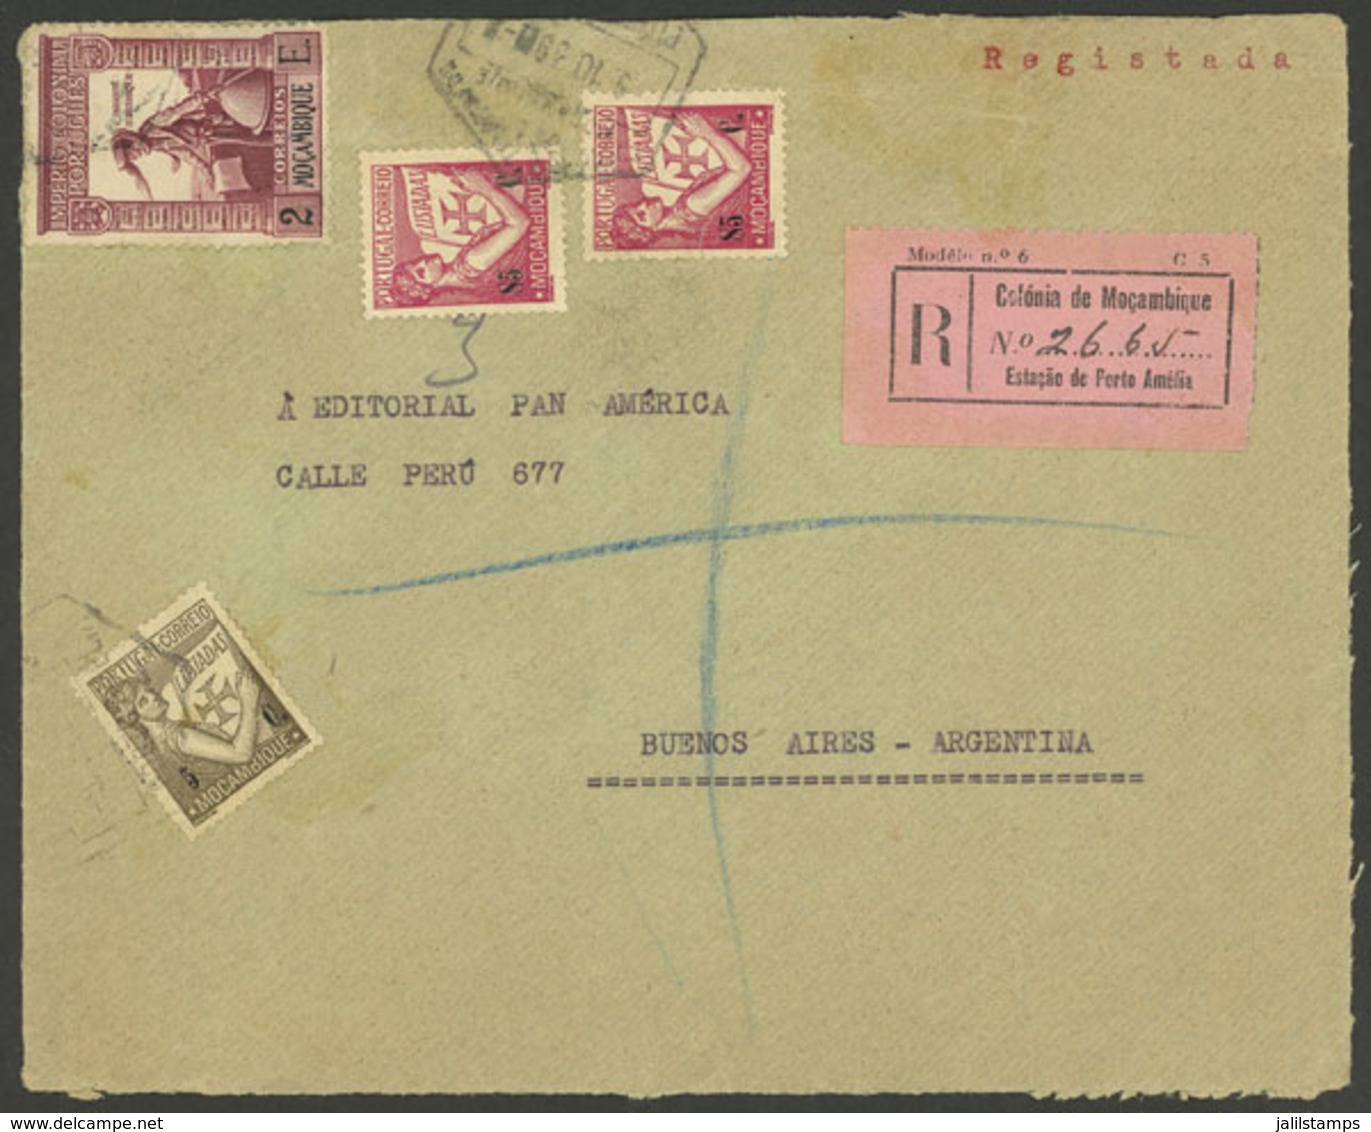 MOZAMBIQUE: Registered Cover Front Sent From Estaçao De Porto Amelia To Argentina On 3/OC/1939, Unusual Destination! - Mozambique